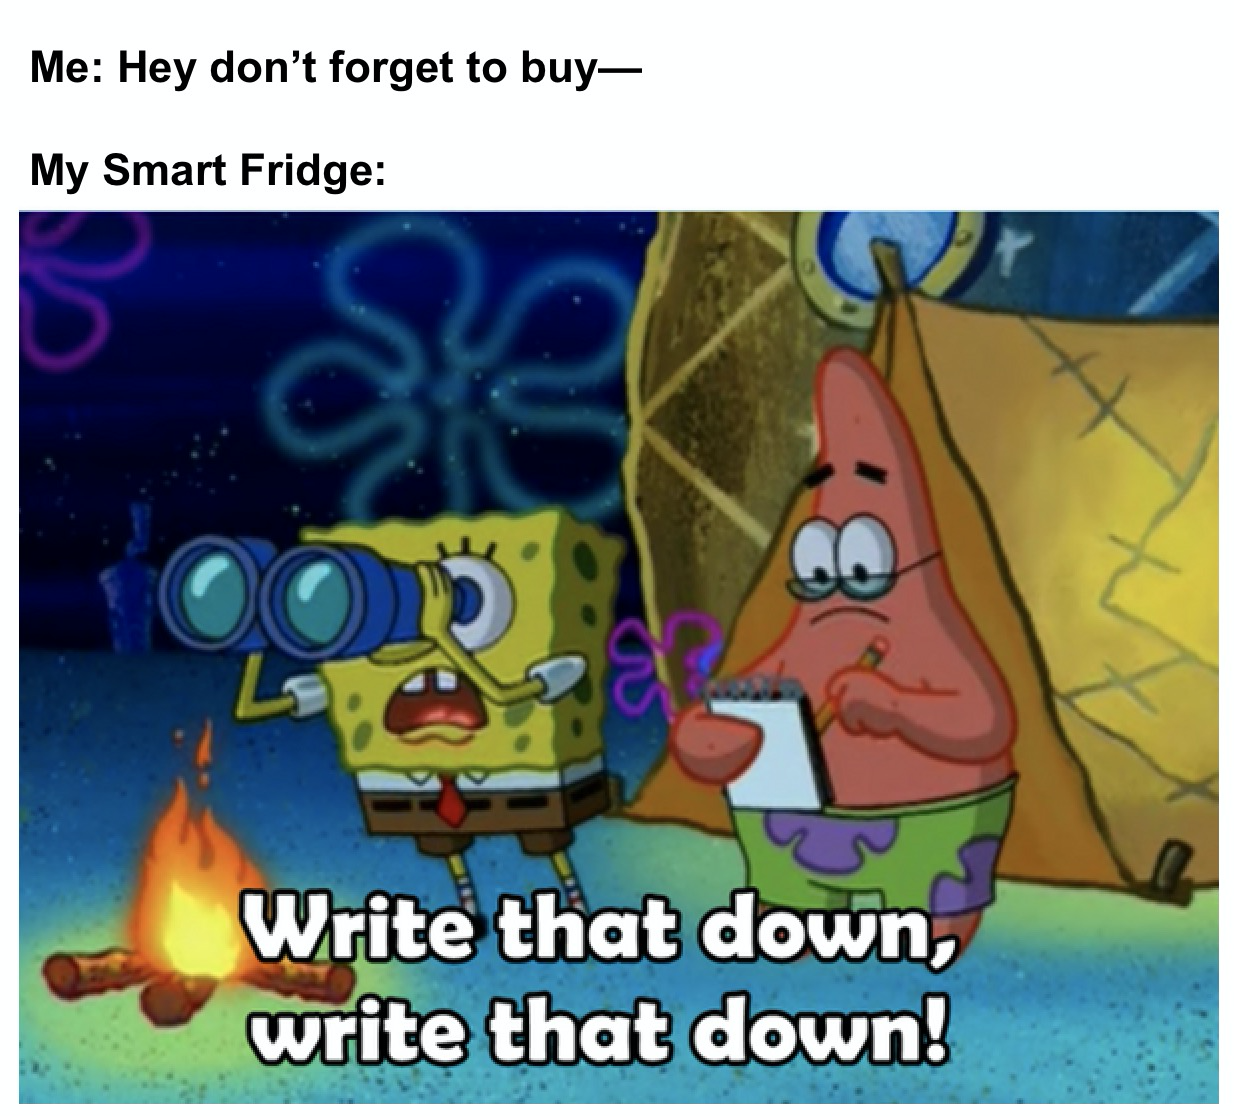 spongebob meme 2020- write that down meme - Me Hey don't forget to buy My Smart Fridge Write that down, write that down!